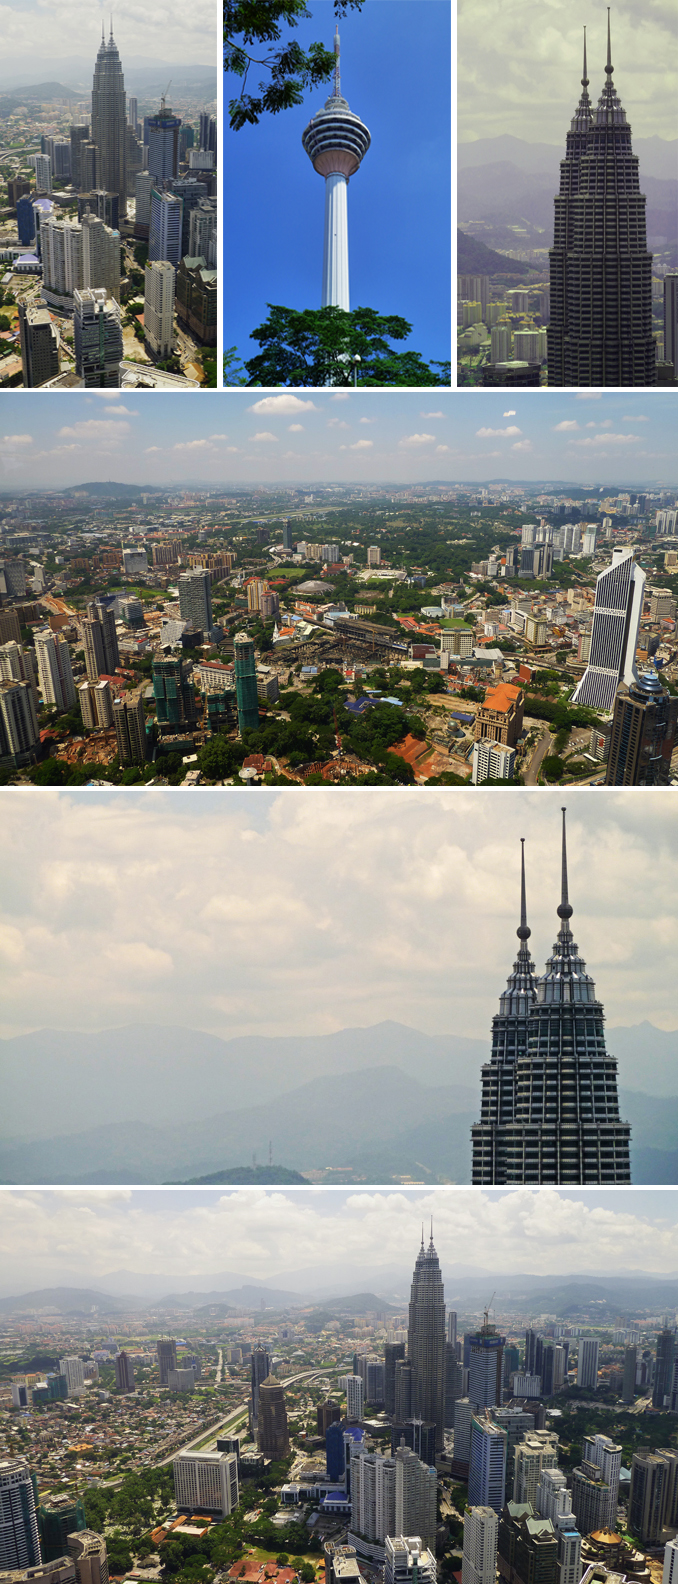 View from the Menara Tower, Kuala Lumpur